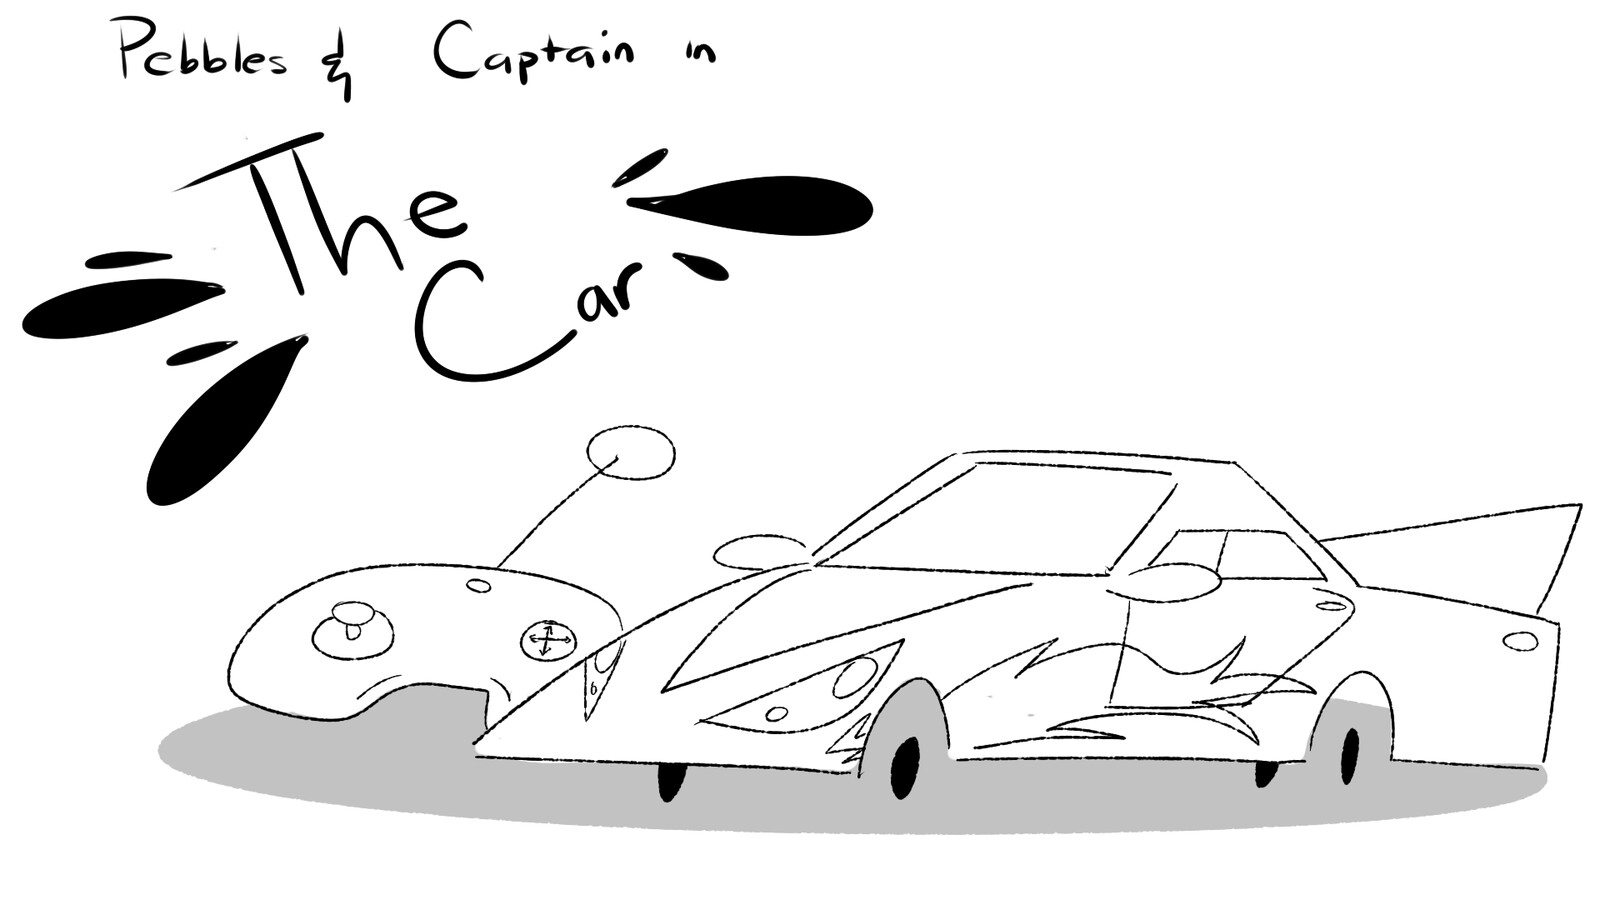 Pebbles & Captain: The Car Storyboard